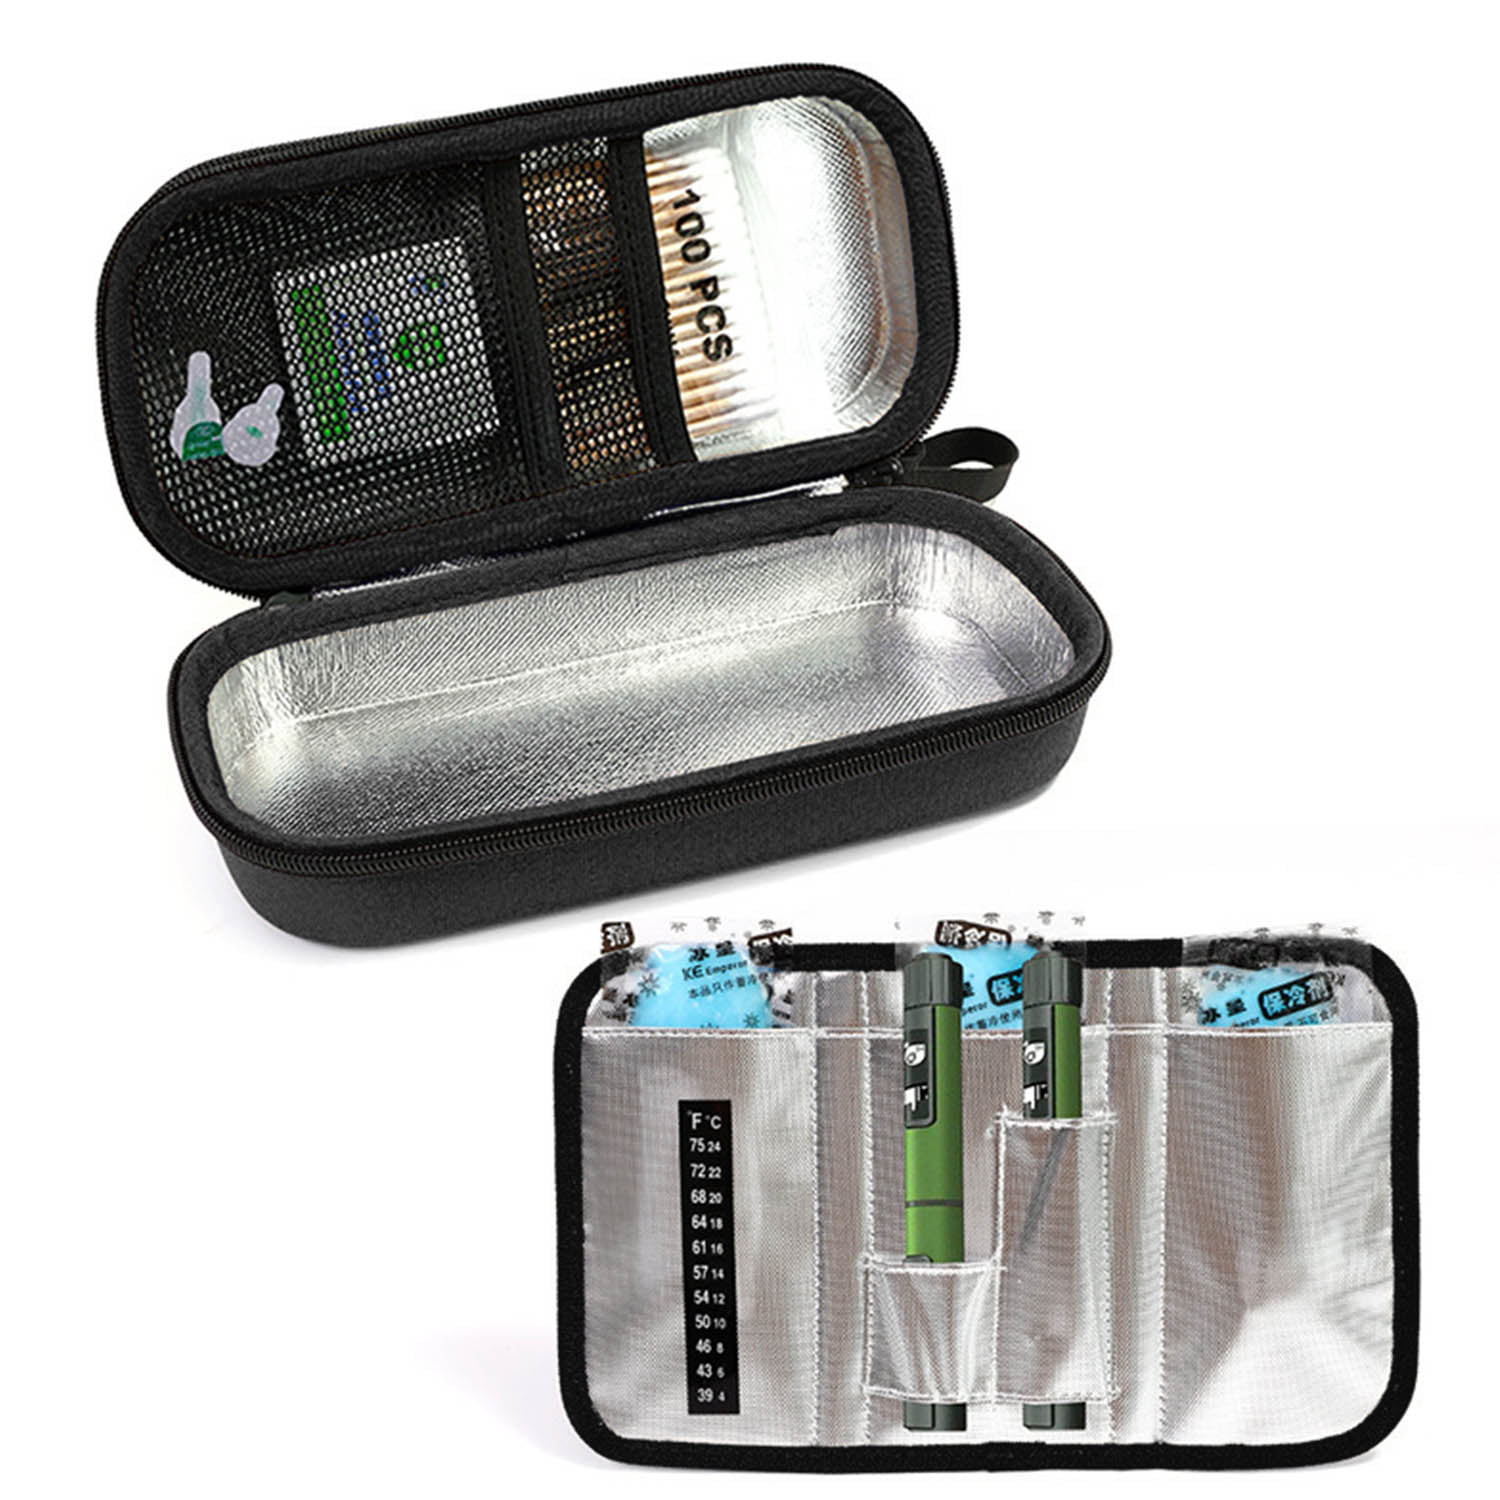 Medical Insulin Pen Case Pouch Cooler Diabetic Pocket Cooling Protector Bag Zip 